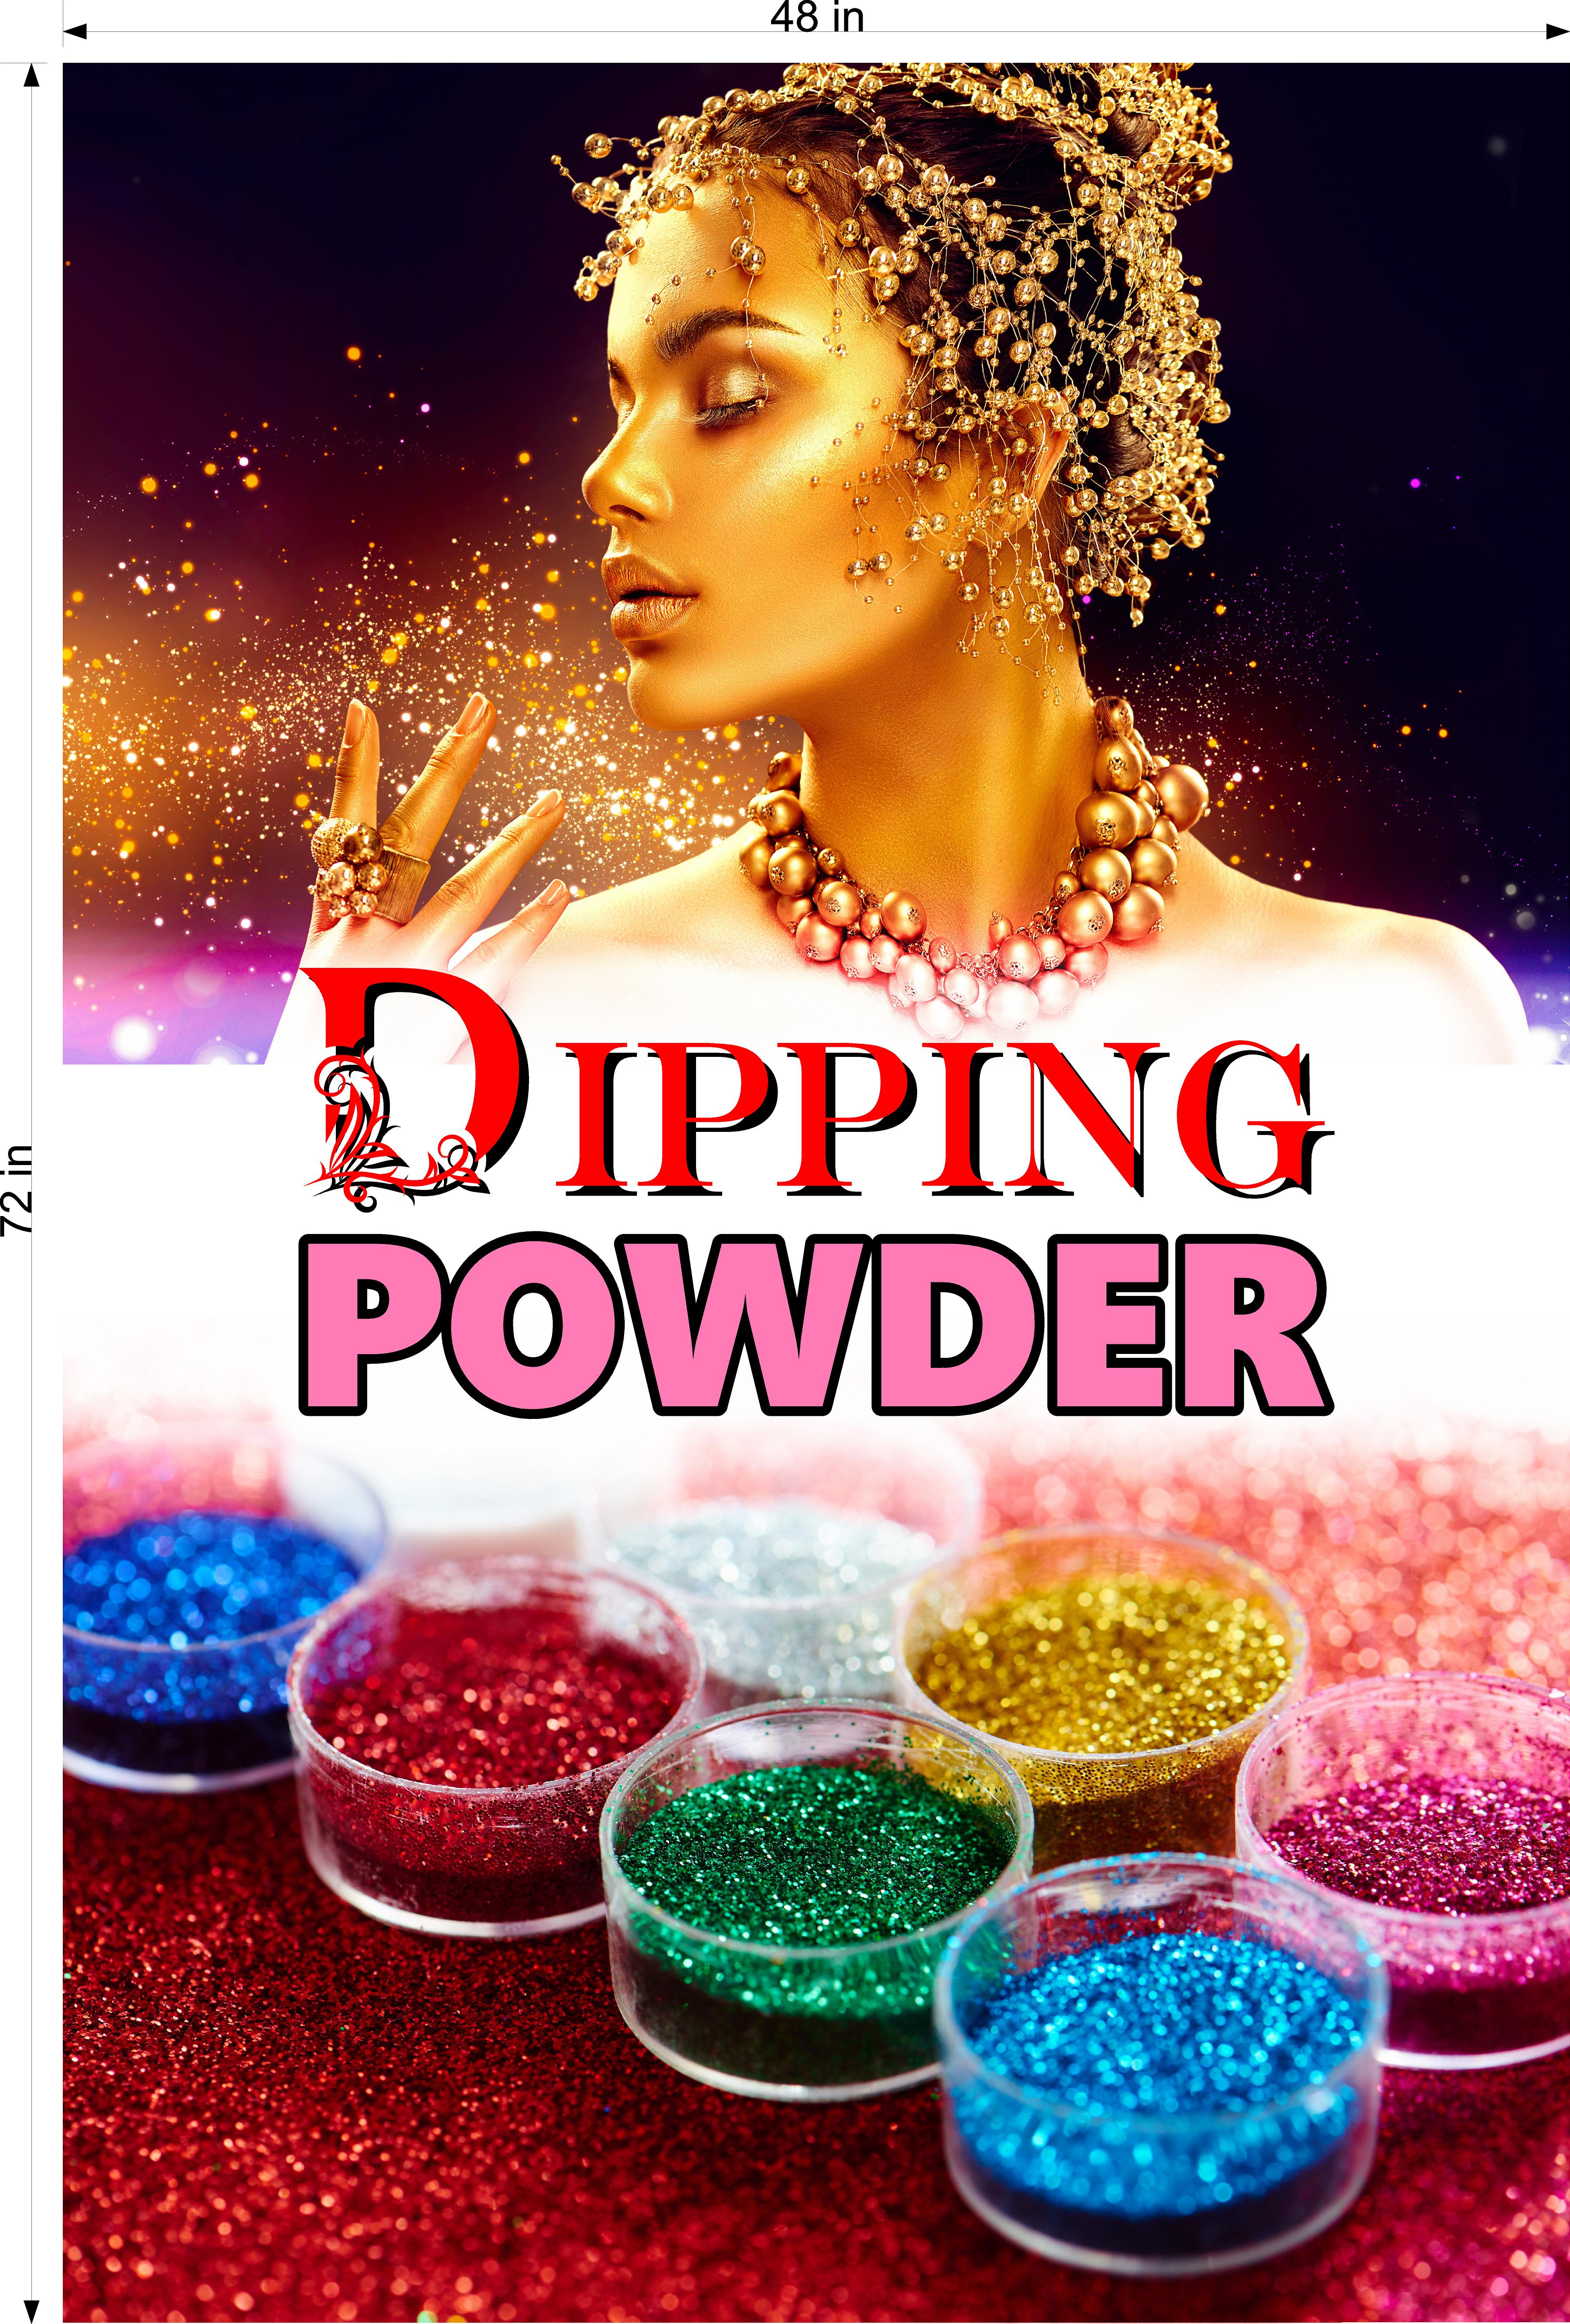 Dipping Powder 04 Photo-Realistic Paper Poster Premium Interior Inside Sign Non-Laminated Nail Salon Vertical